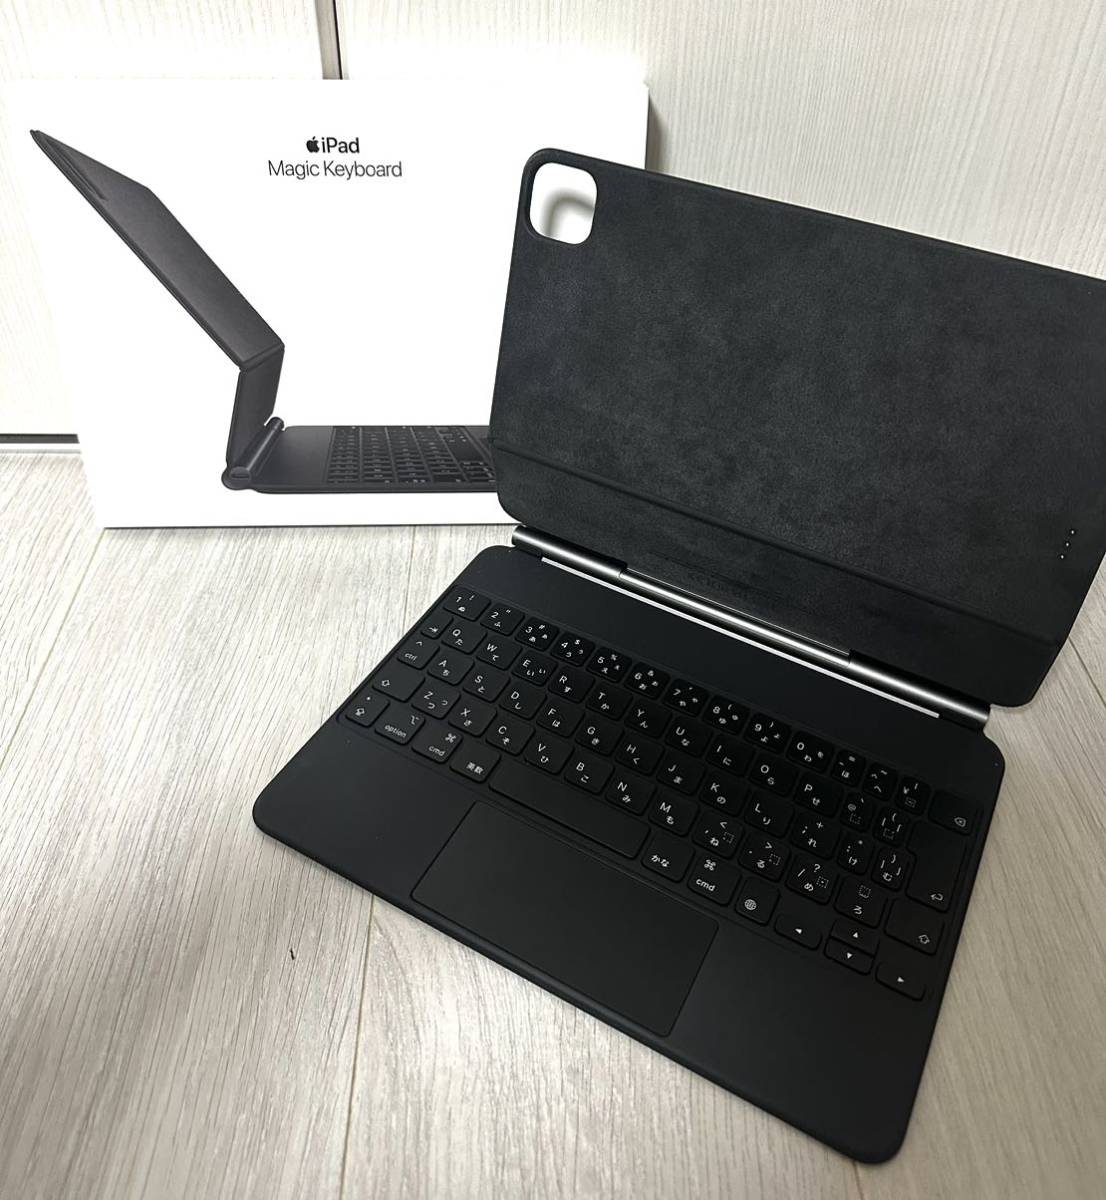 Apple 11インチiPad Pro(第3世代)・iPad Air(第5世代)用 Magic 